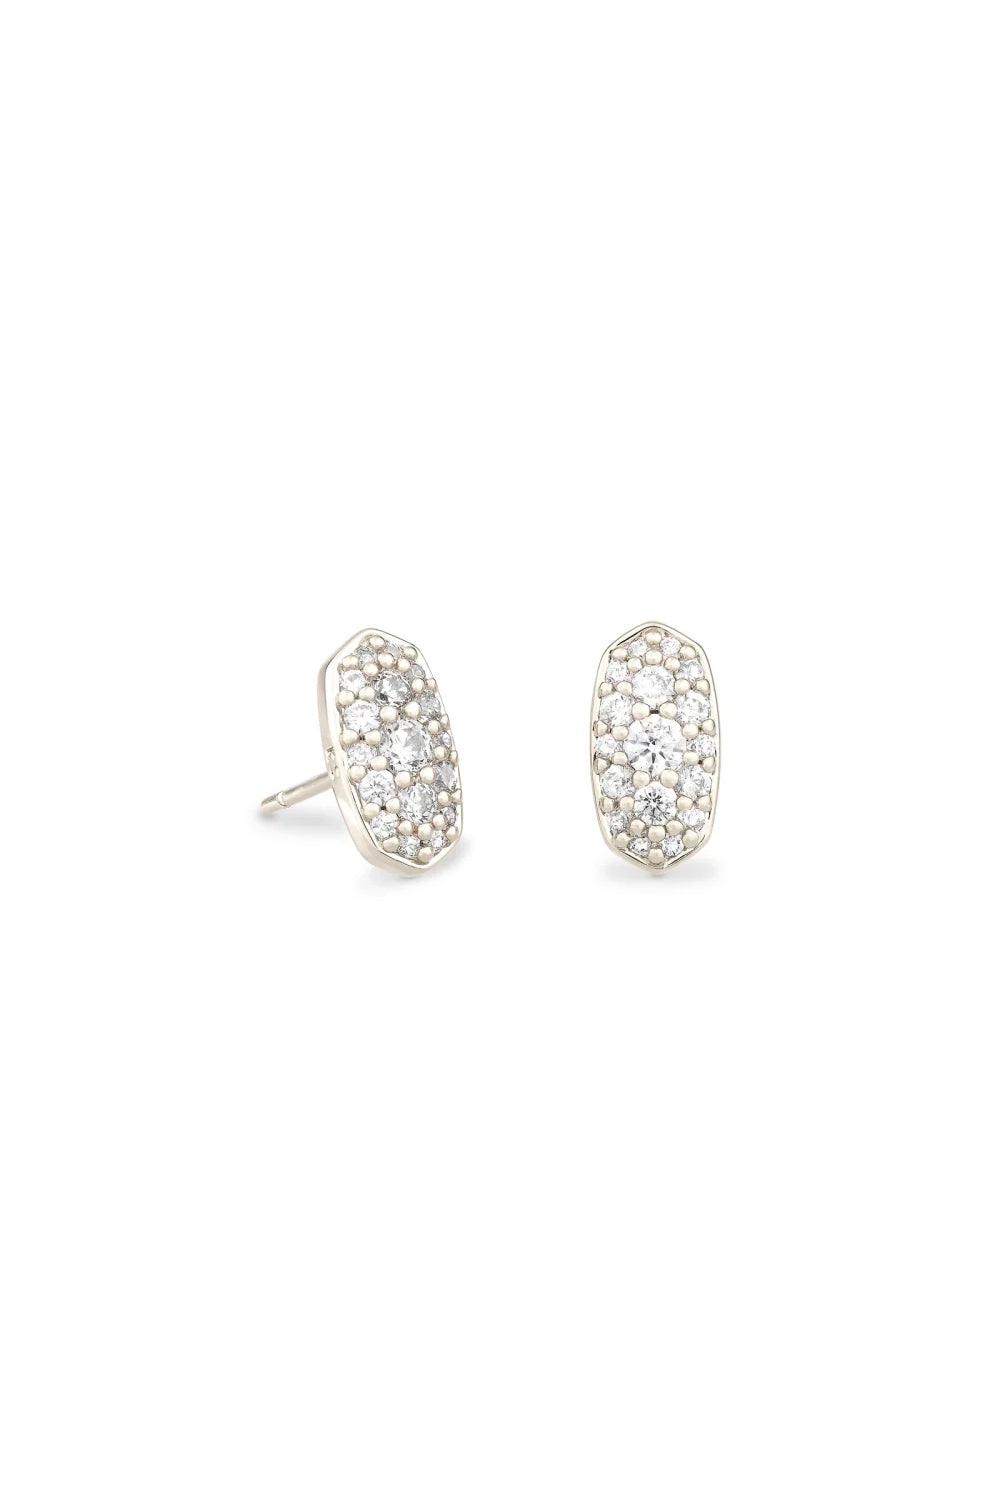 Kendra Scott: Grayson Silver Stud Earrings - White Crystal | Makk Fashions